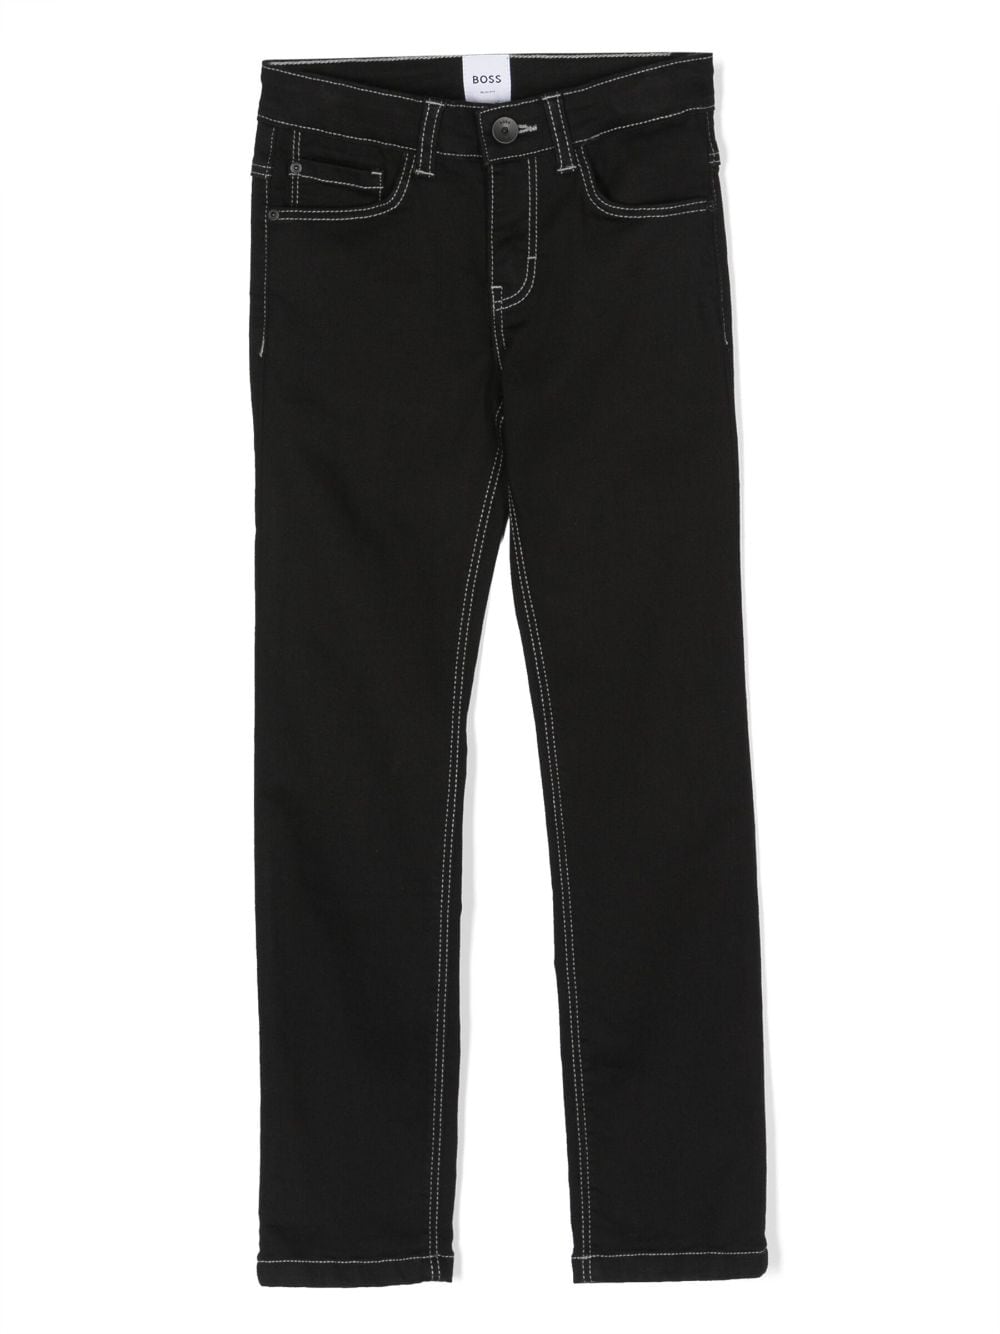 Black stretch denim cotton boy HUGO BOSS pants | Carofiglio Junior